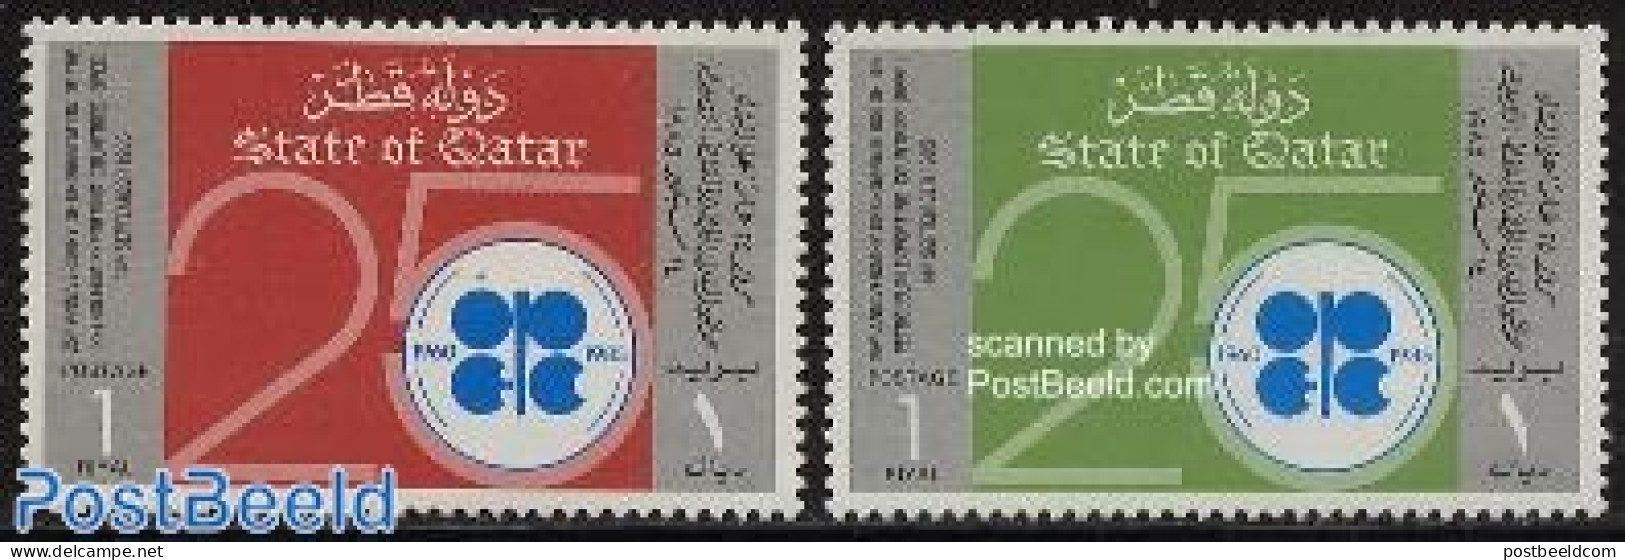 Qatar 1985 25 Years OPEC 2v, Mint NH - Qatar